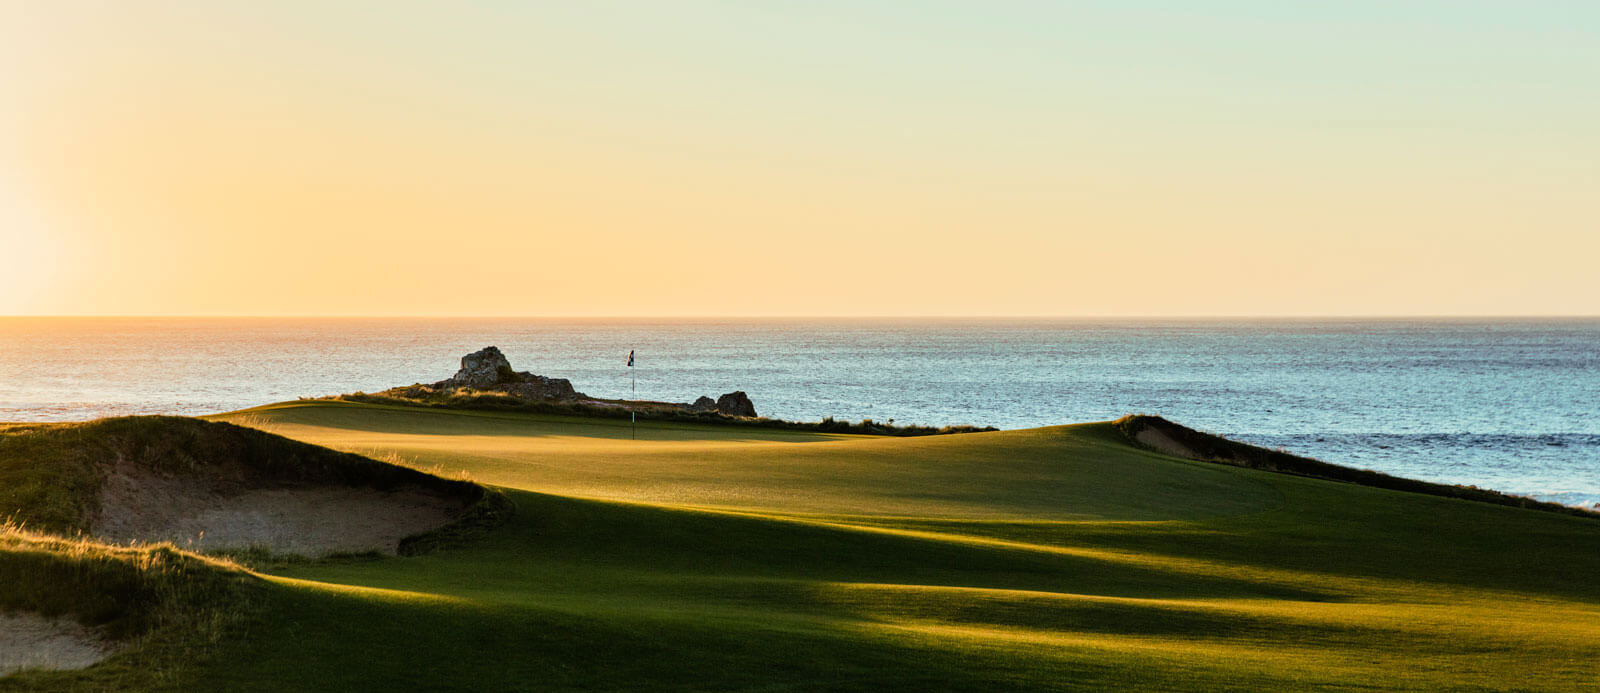 Ocean Dunes Golf Course at Sunset